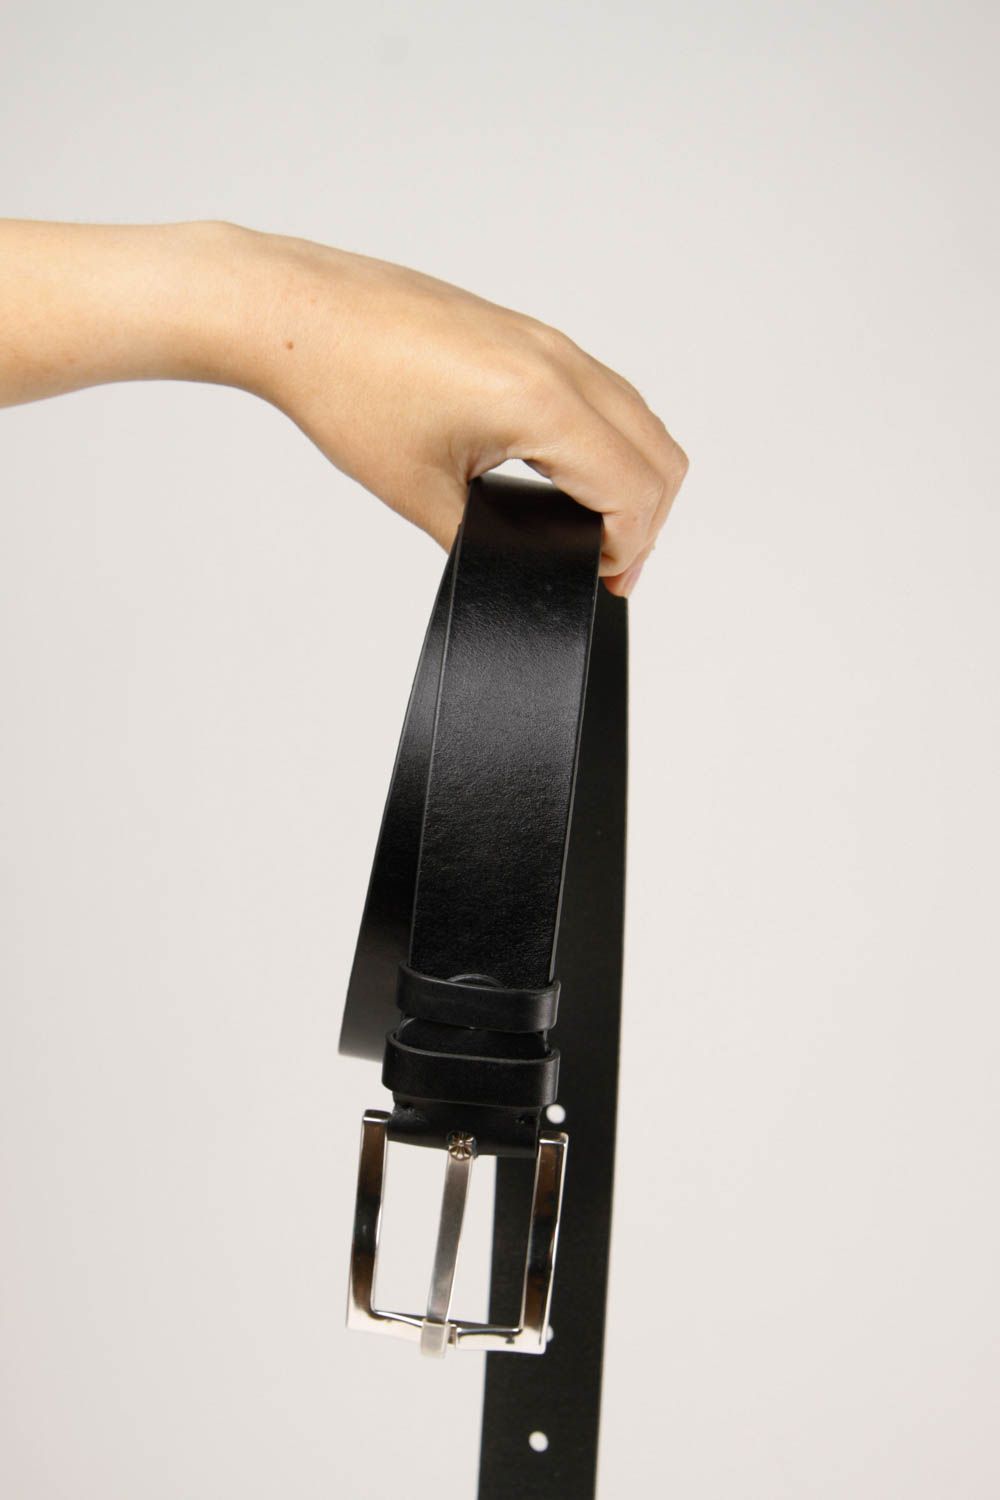 Cinturón de cuero natural negro ropa masculina artesanal ccesorio de moda foto 2